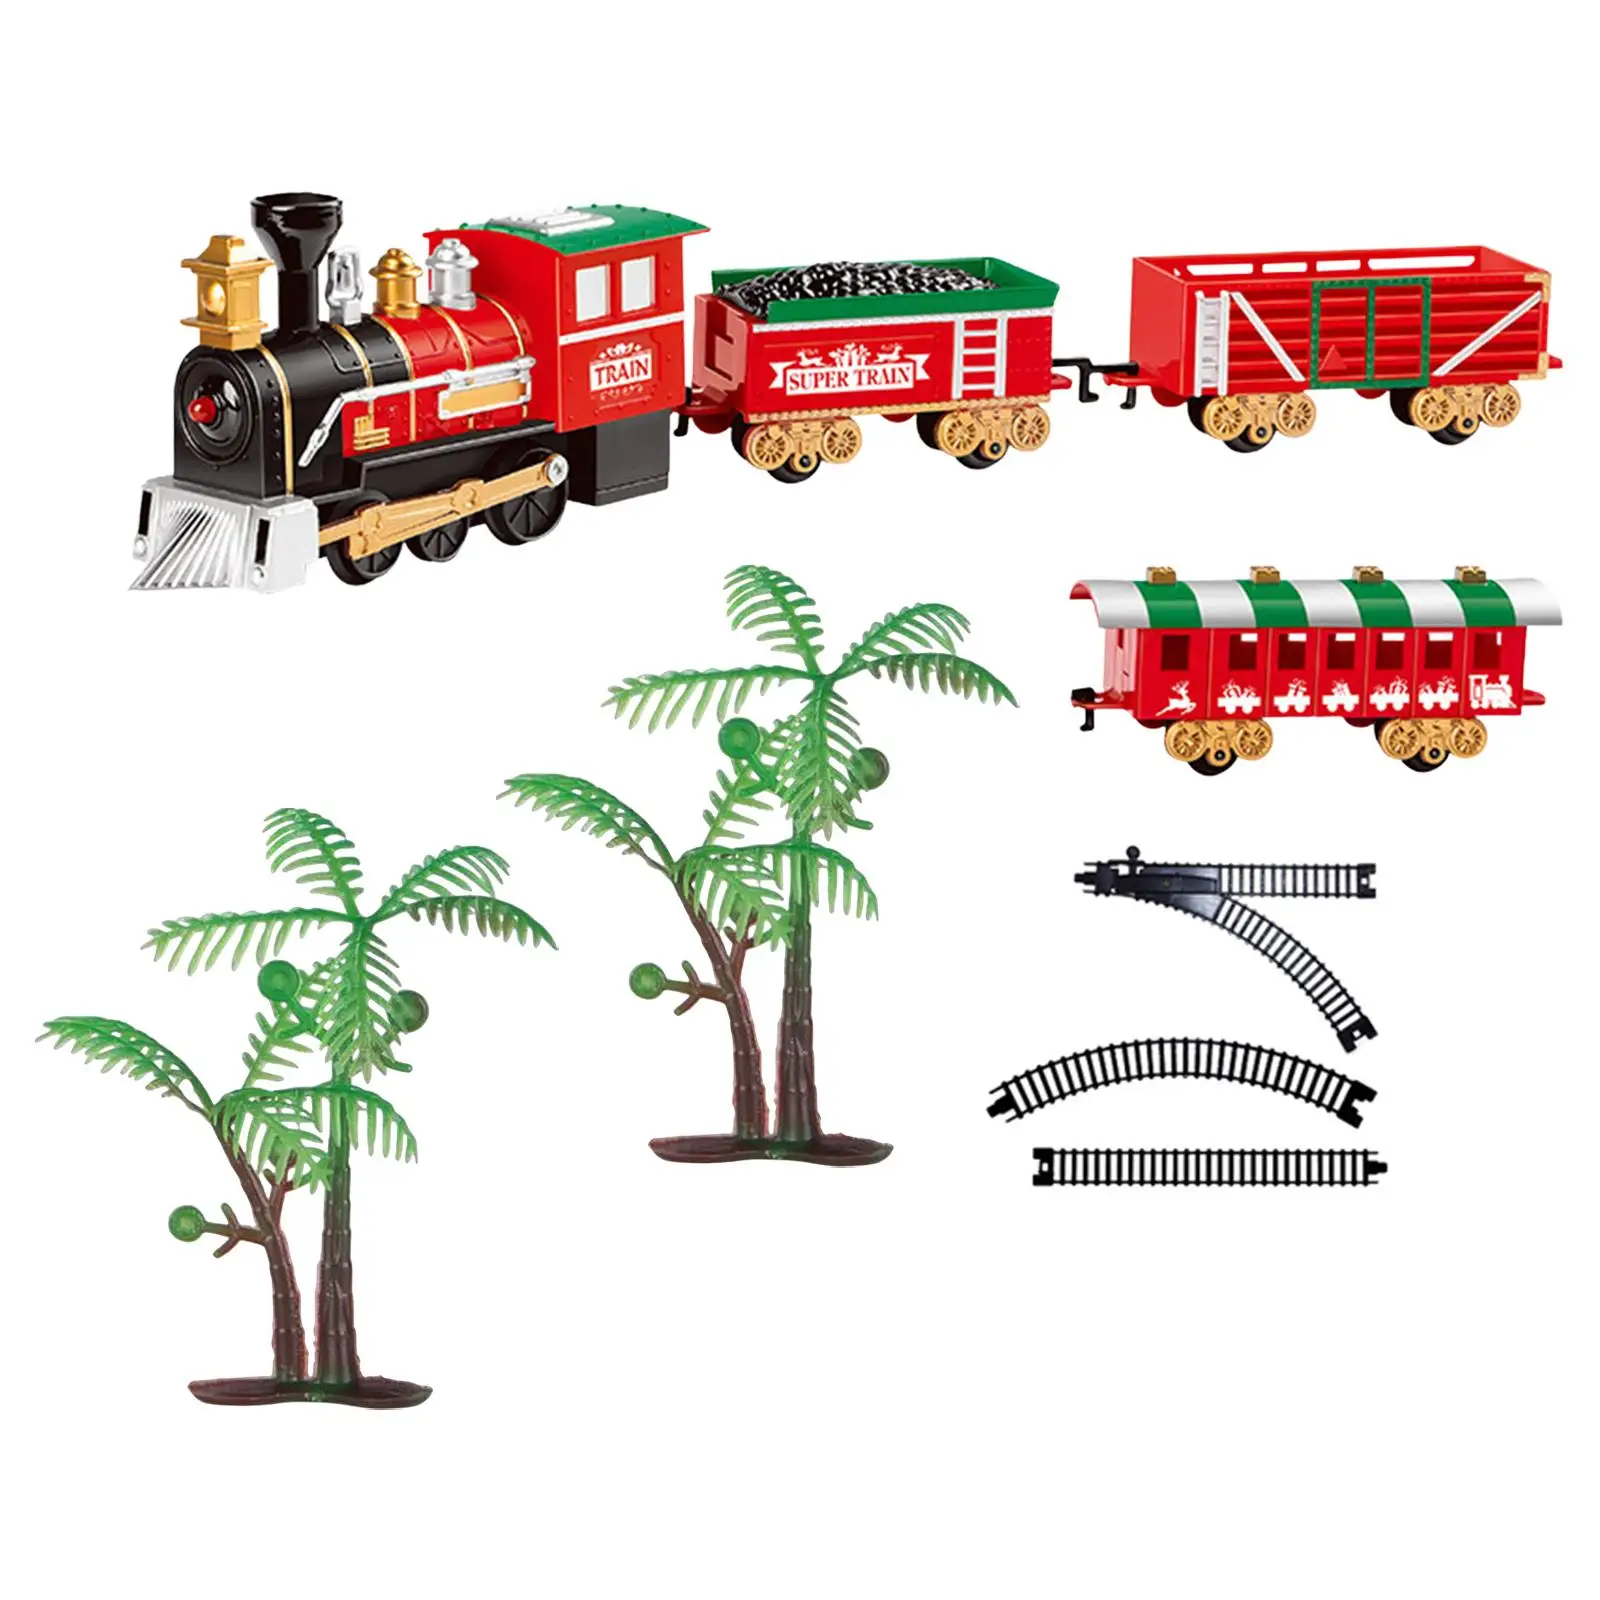 Christmas Train Set Fine Motor Skills Educational Learning Toy Building Construction Set Railway Track Set for Kids Children